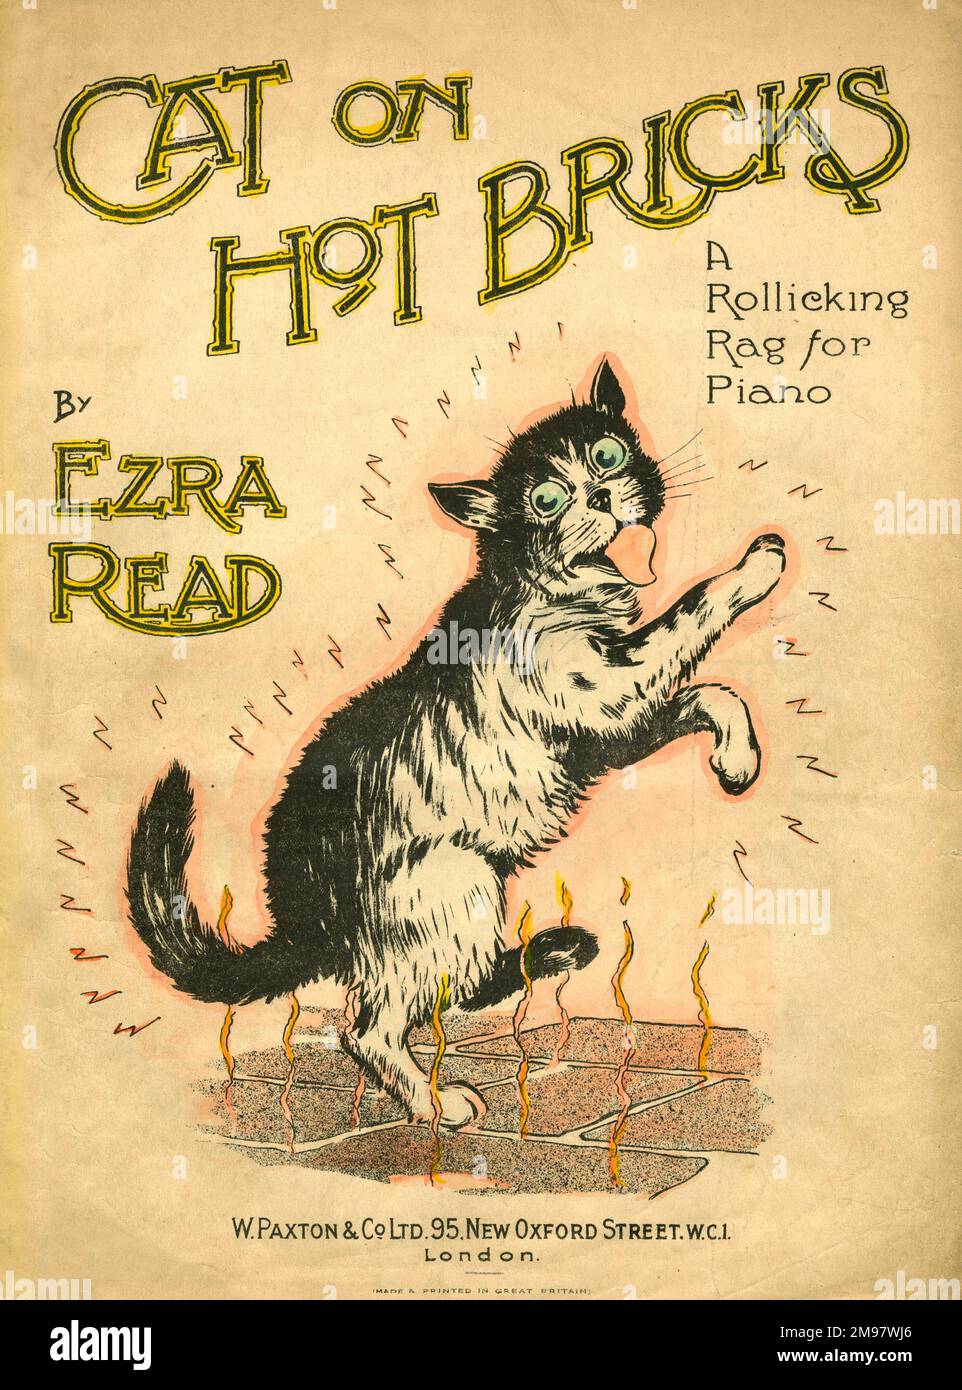 Titelseite: "Cat on Hot Bricks", "A Rollicking Rag for Piano" von Ezra Read. Stockfoto